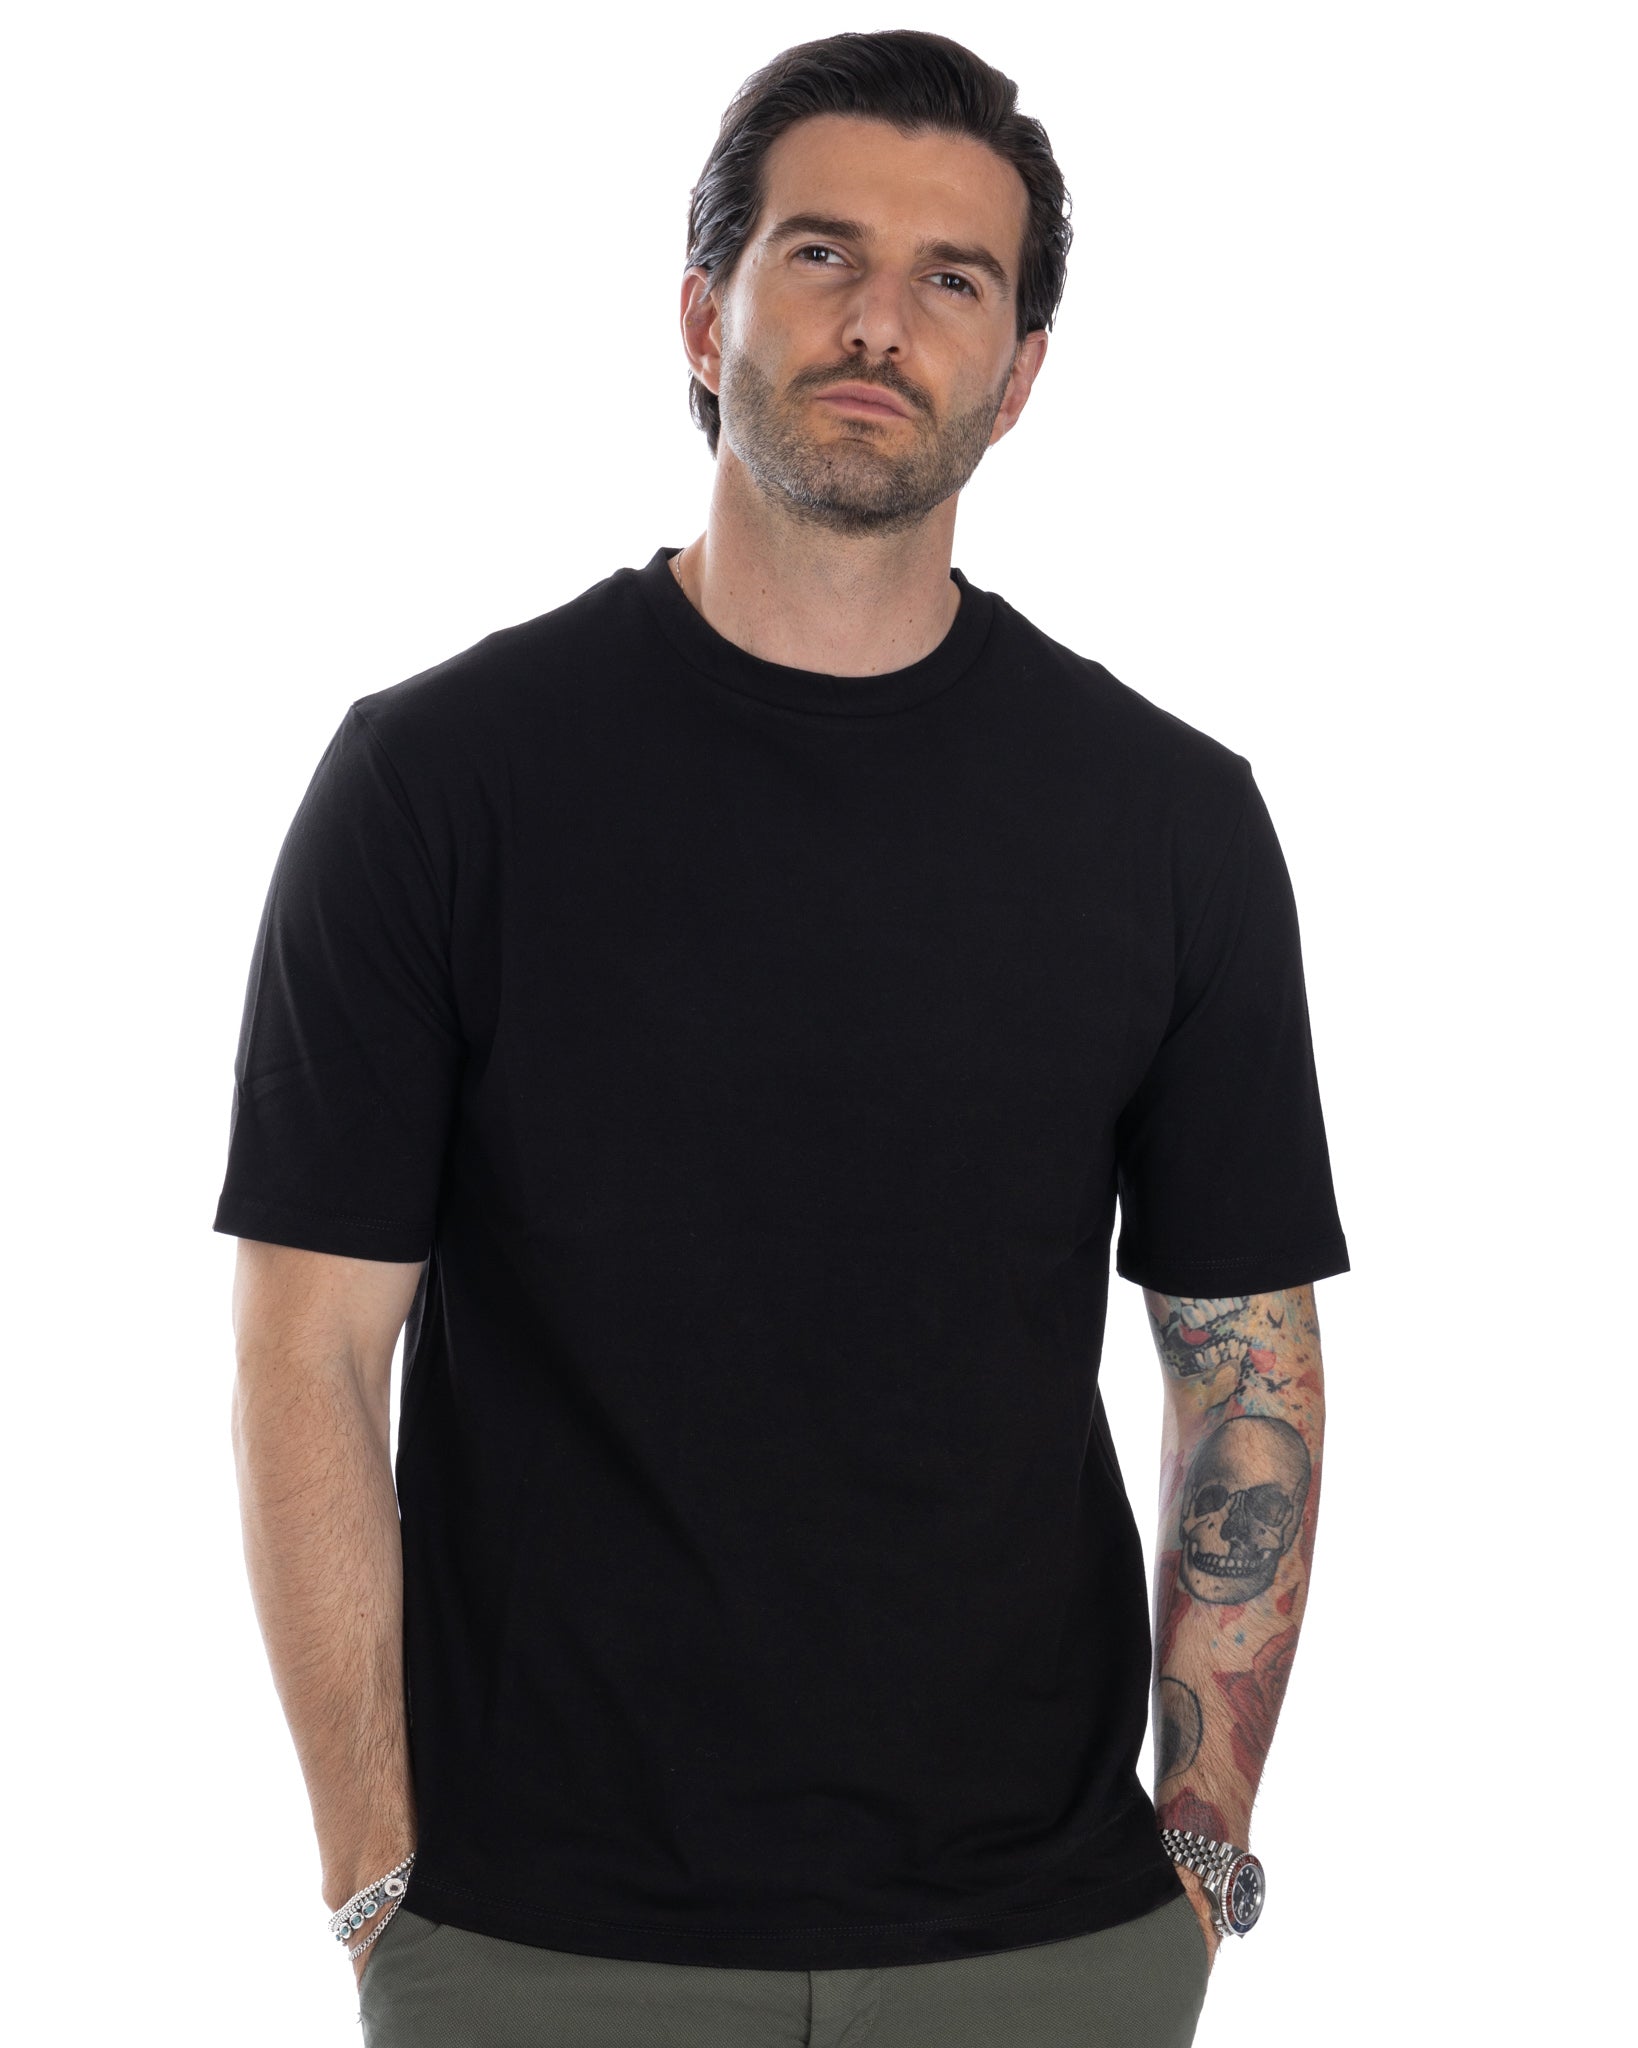 Tee - basic black cotton t-shirt